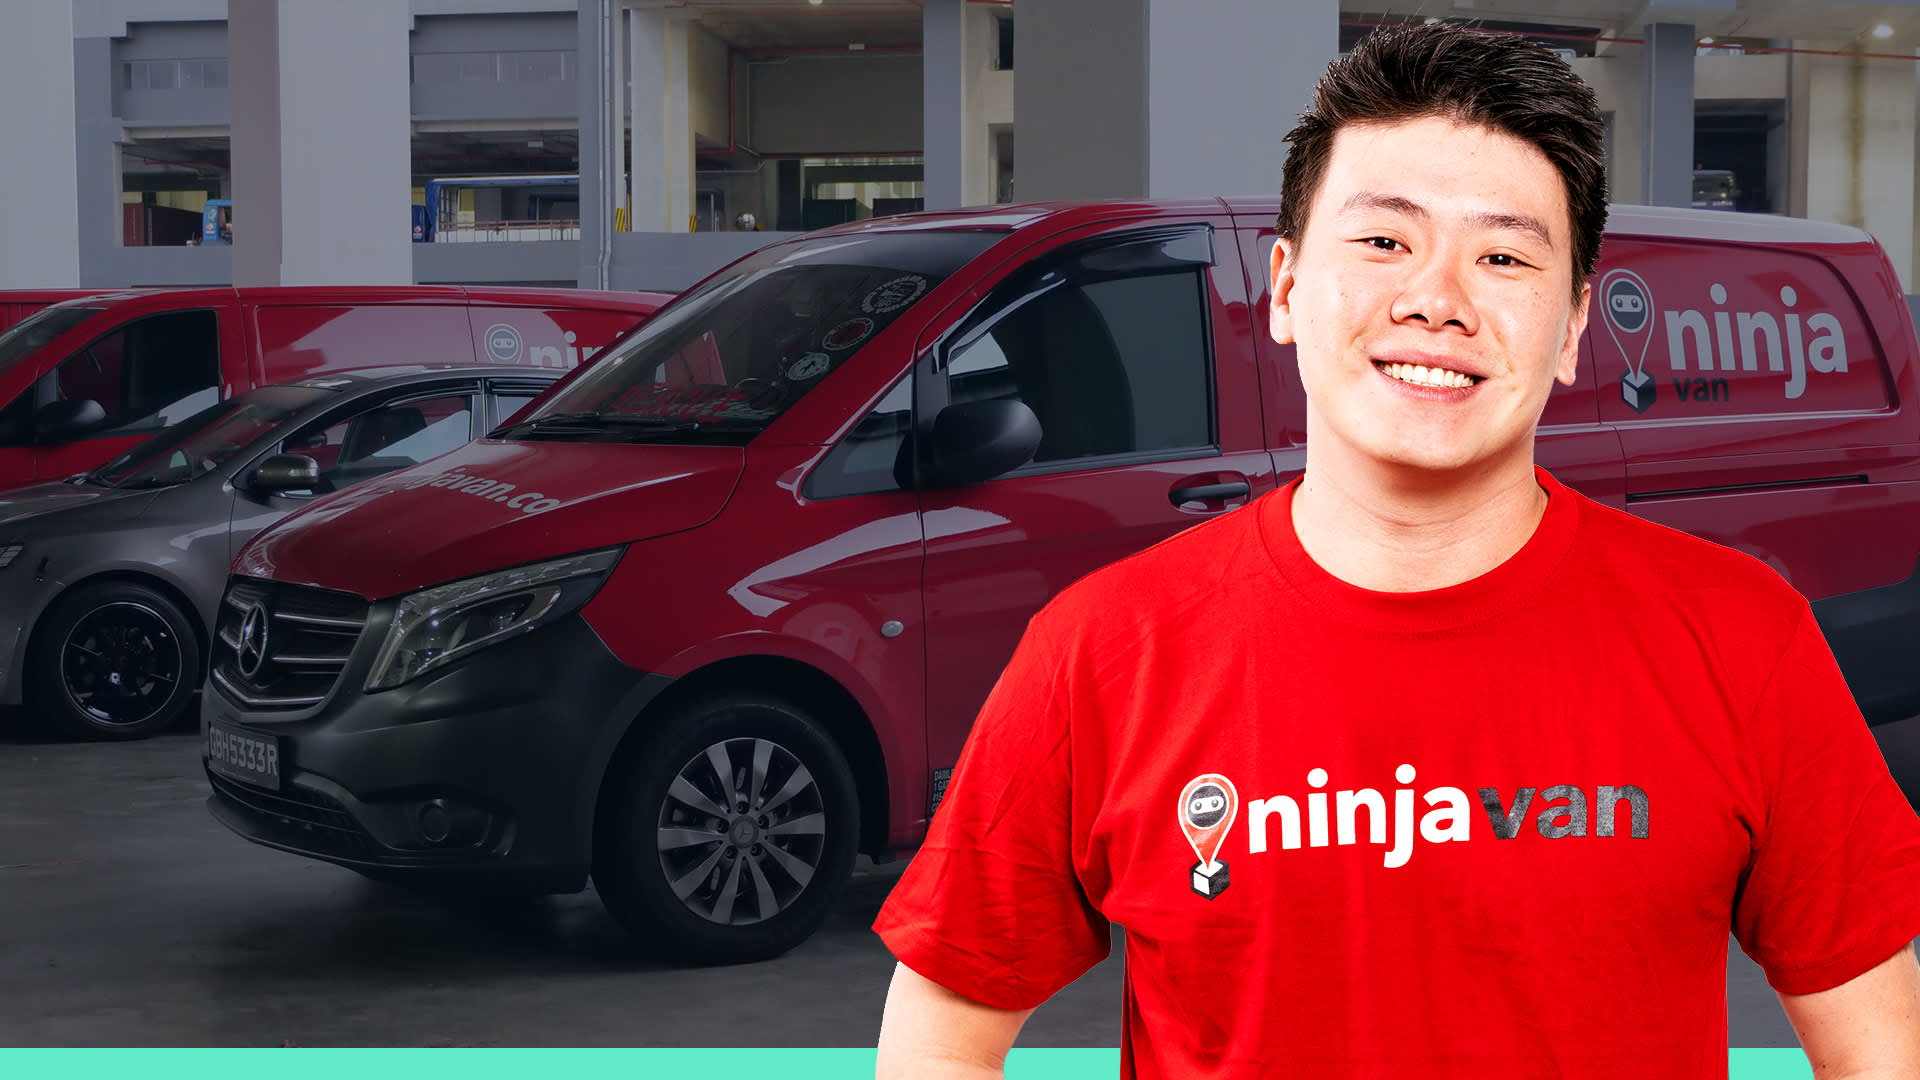 Ninja Van: How failure inspired 3 